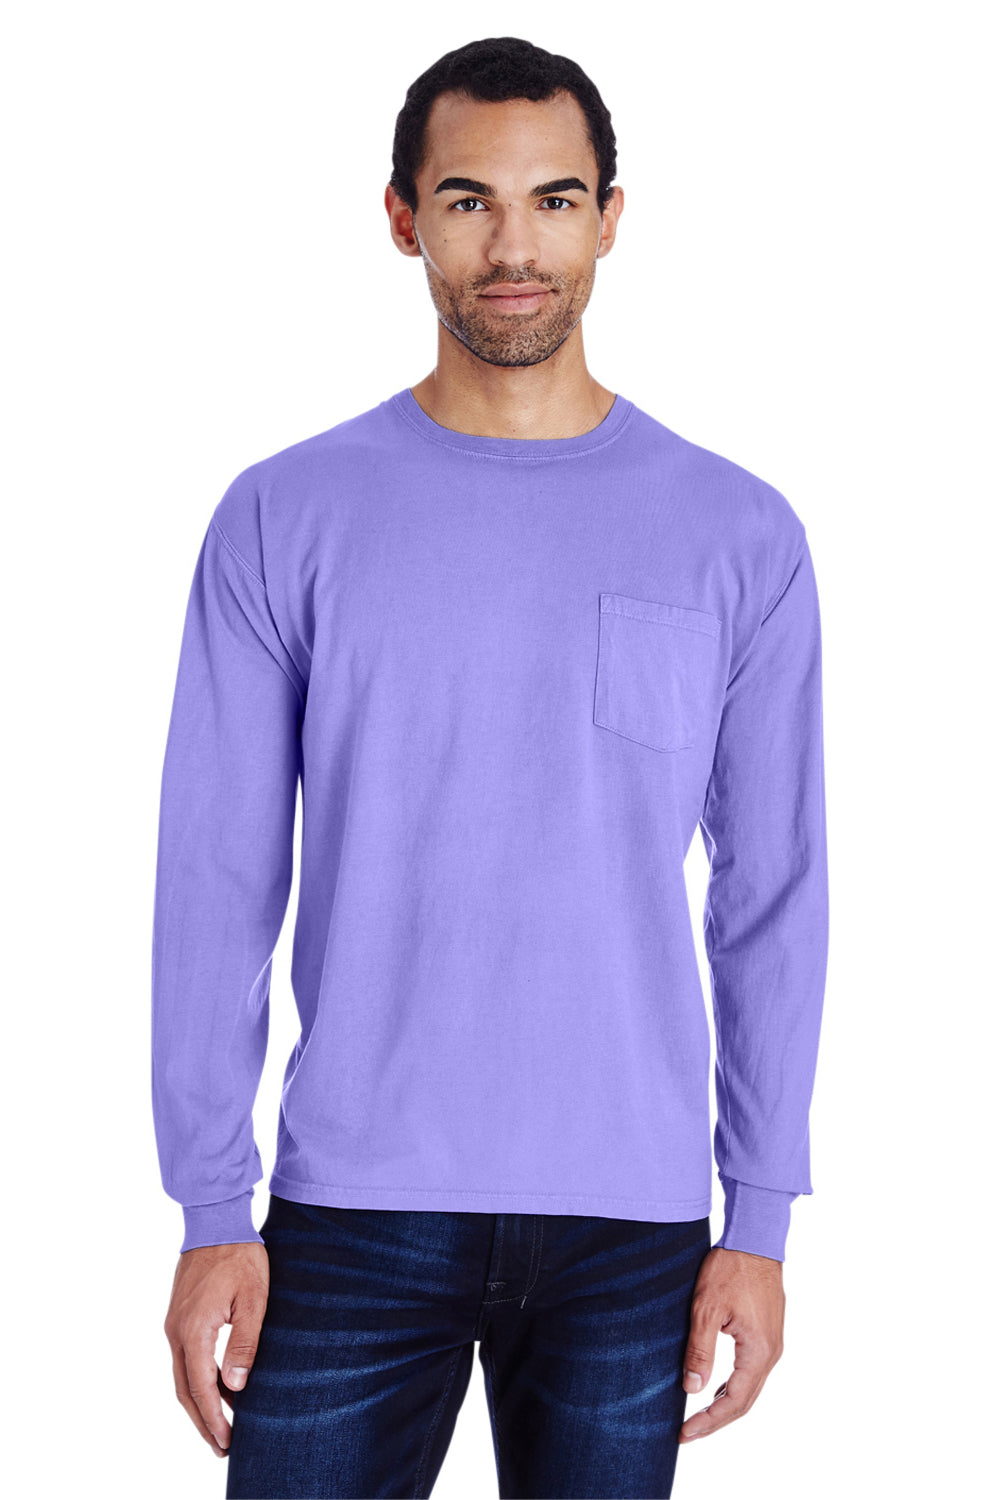 ComfortWash by Hanes GDH250 Long Sleeve Crewneck T-Shirt w/ Pocket Lavender Purple Front